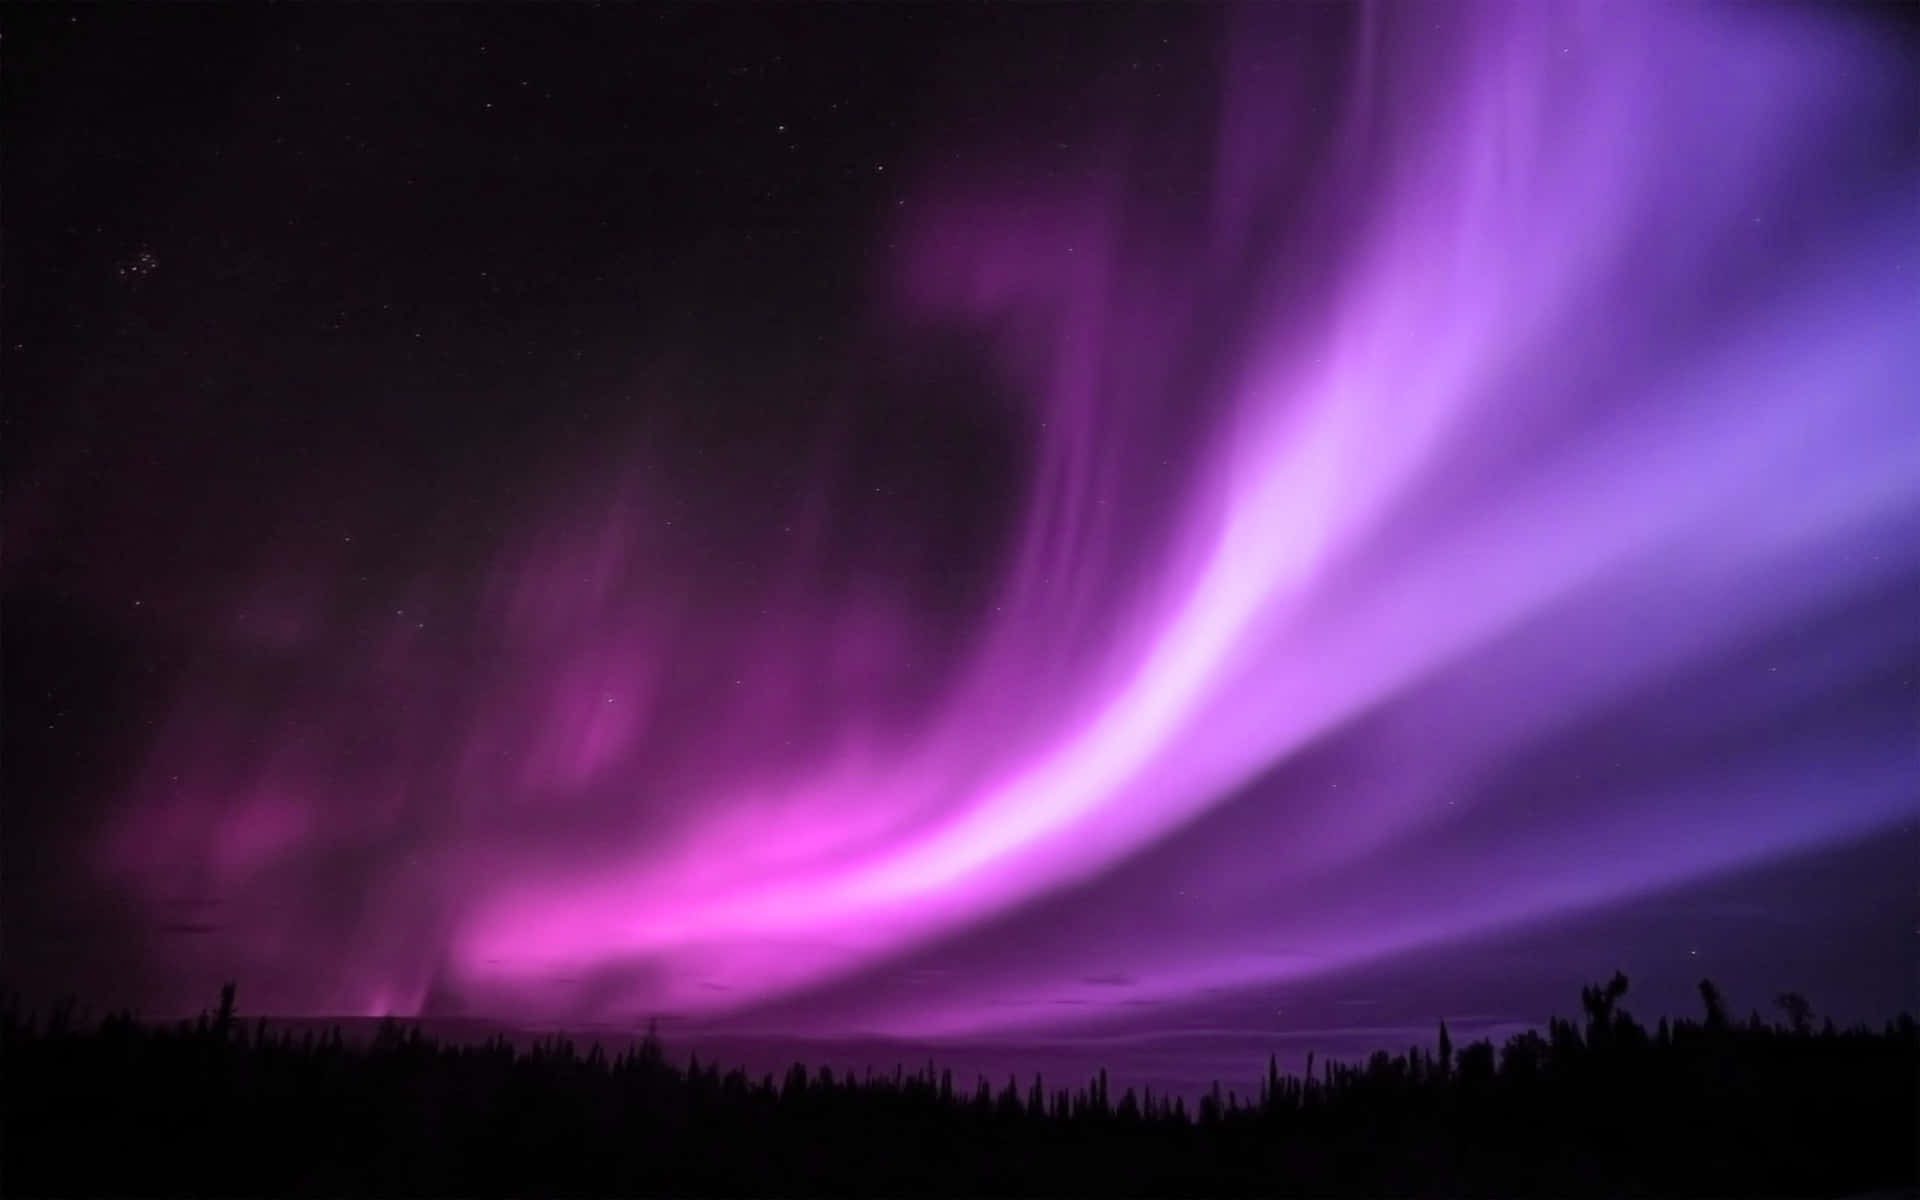 Spectacular Aurora borealis lights up the night